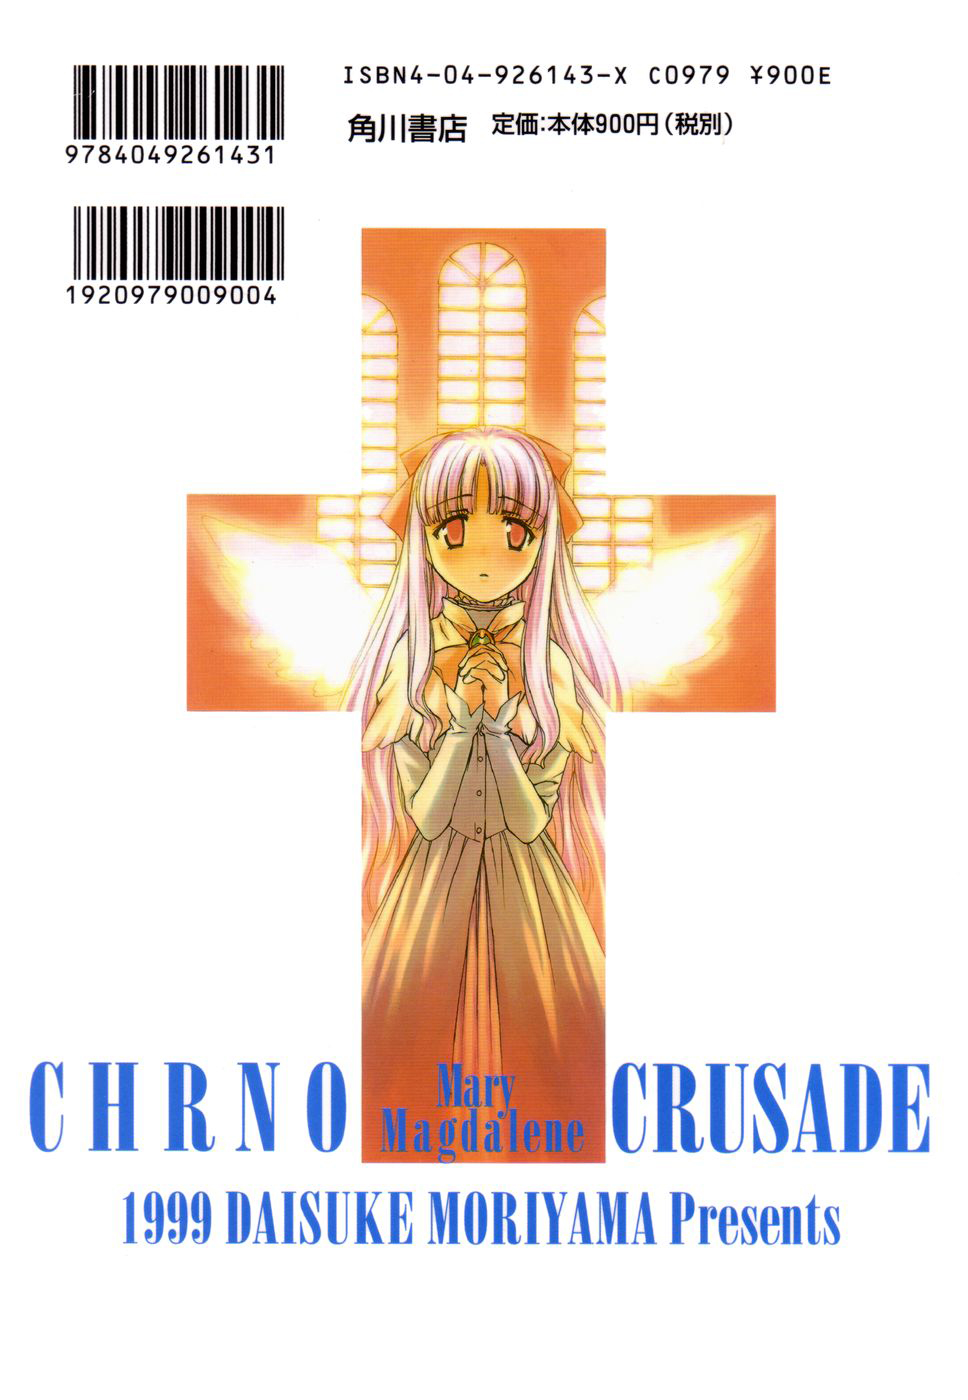 [Manga] Chrono Crusade (Đọc online tại SSF) - Page 2 CHRNO-CRUSADE-01-000-b